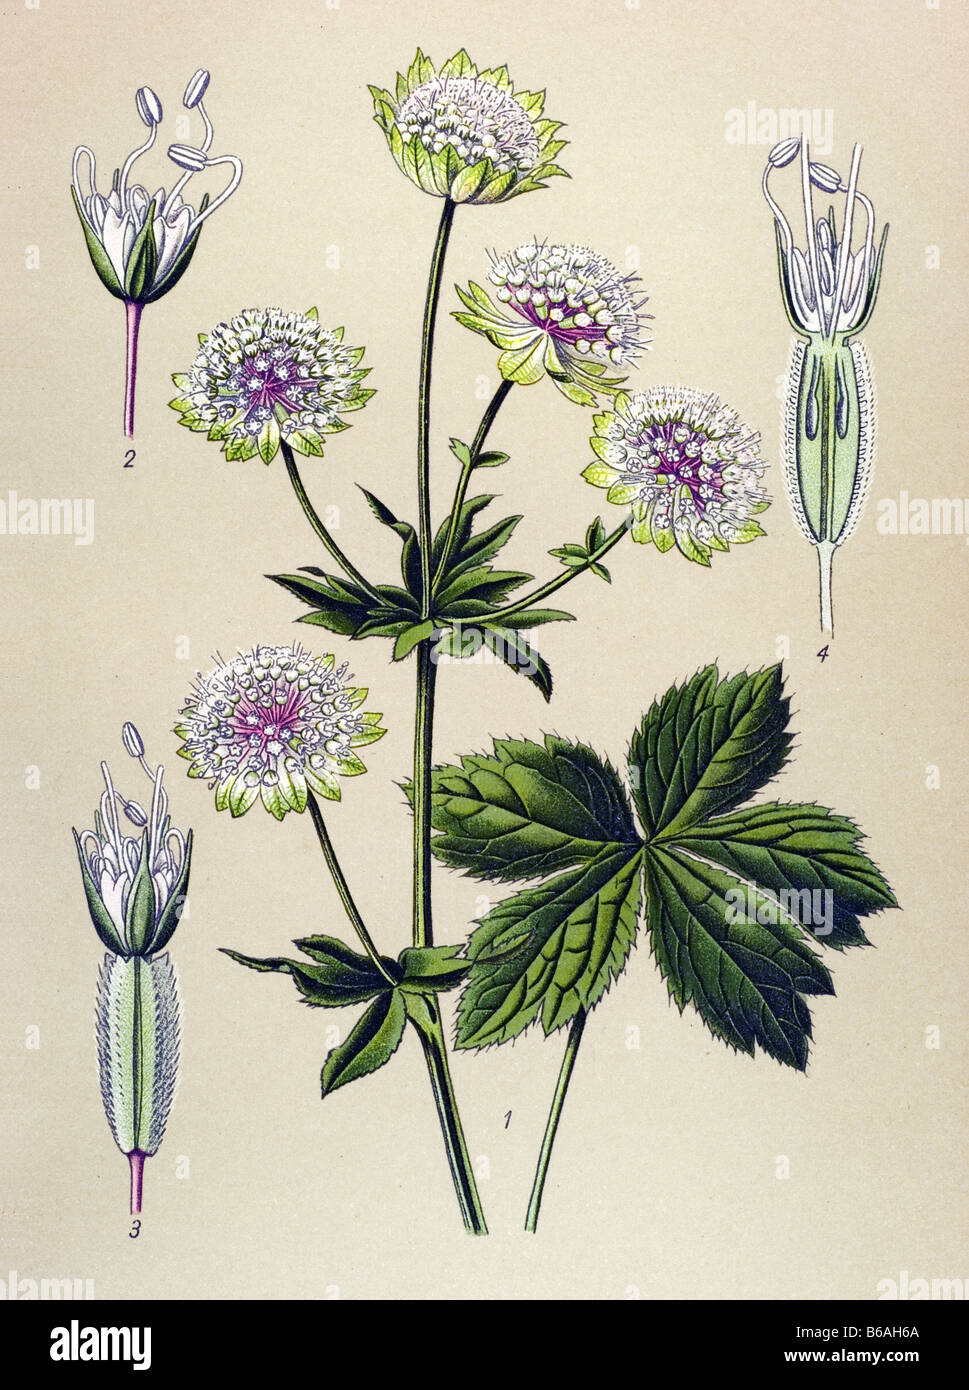 Great Masterwort, Astrantia major poisonous plants illustrations Stock Photo